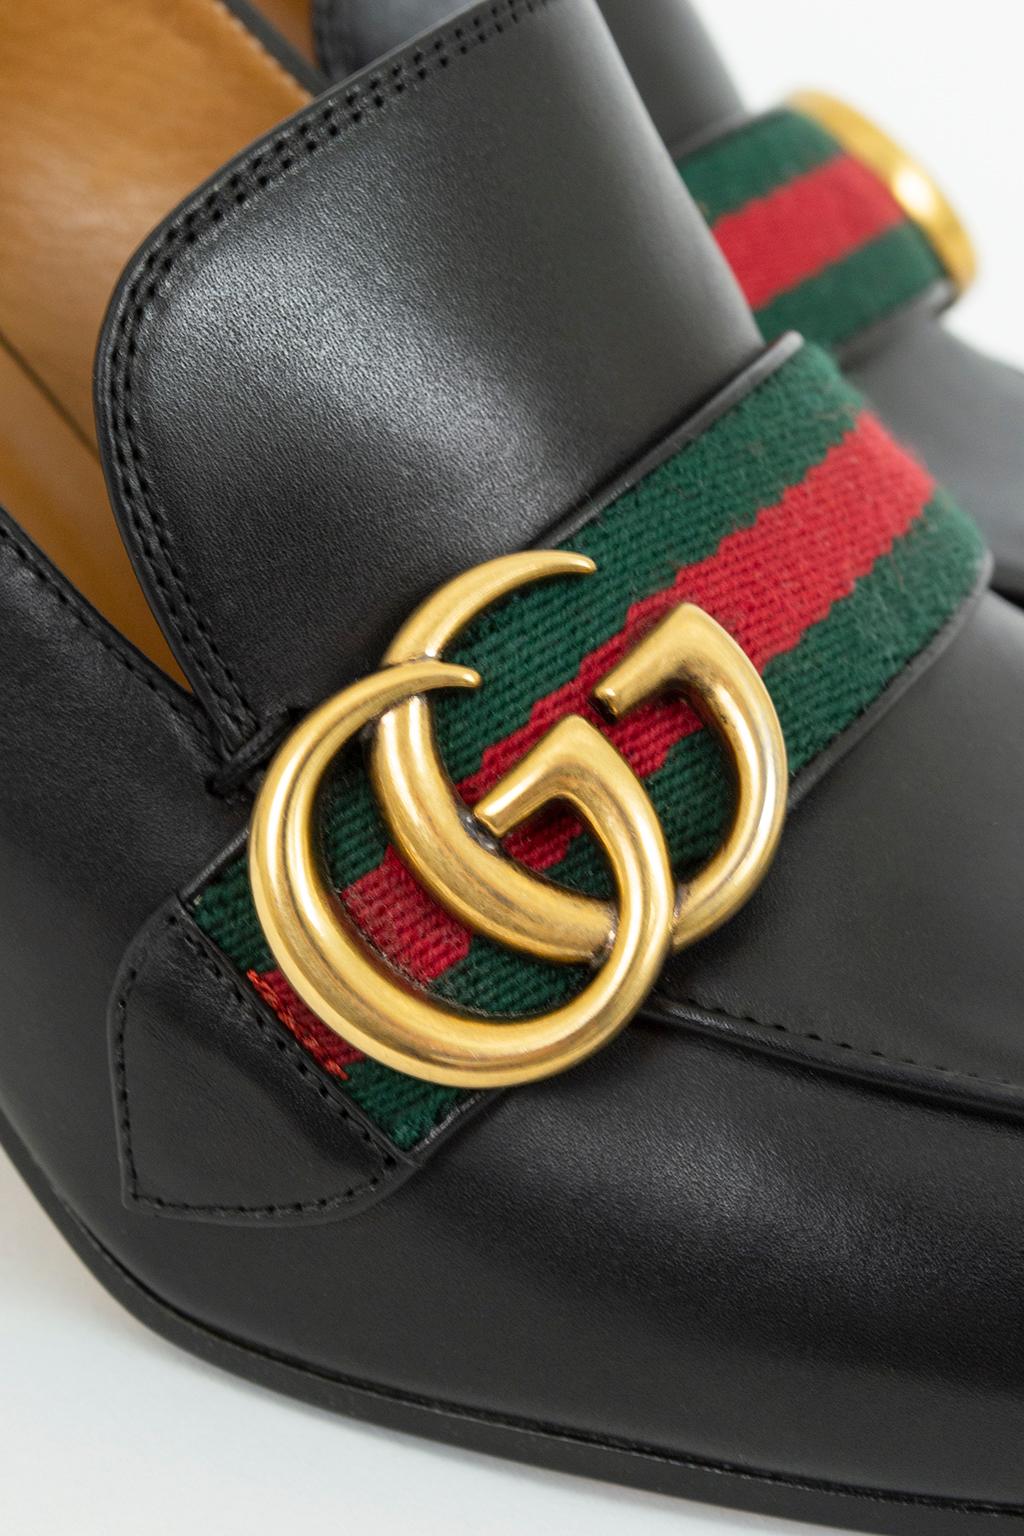 Gucci Black Leather Peyton GG Web Block Heel Loafer Pumps – It 40.5, 21st C. 1